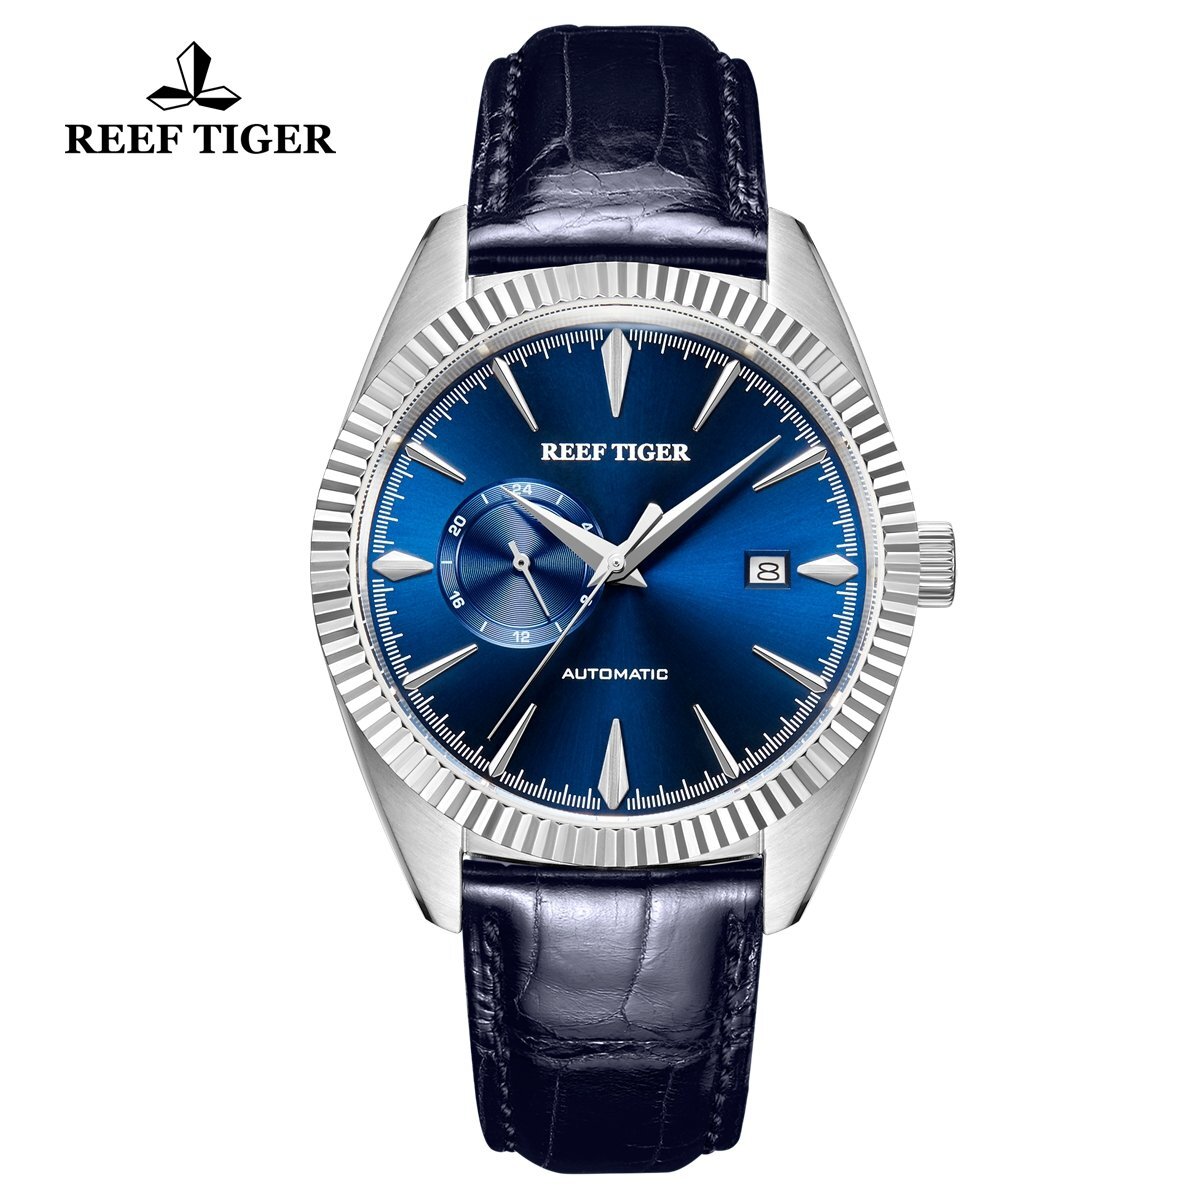 Đồng hồ nam Reef Tiger RGA1616-YLL